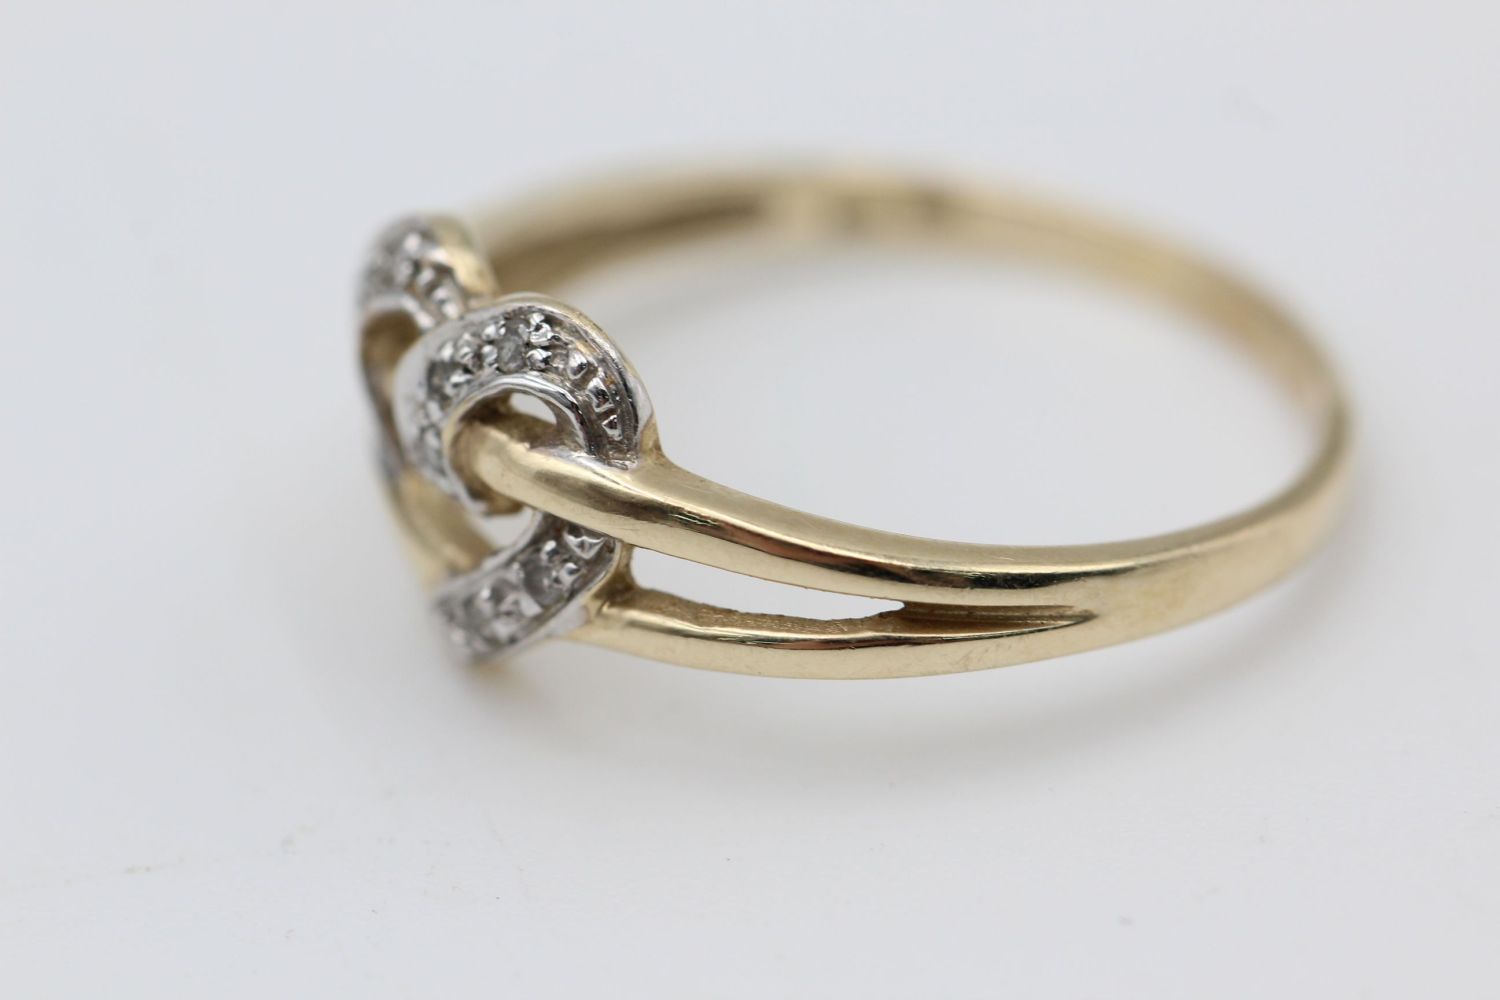 9ct Gold diamond detail heart ring 1.9 grams gross - Image 2 of 5